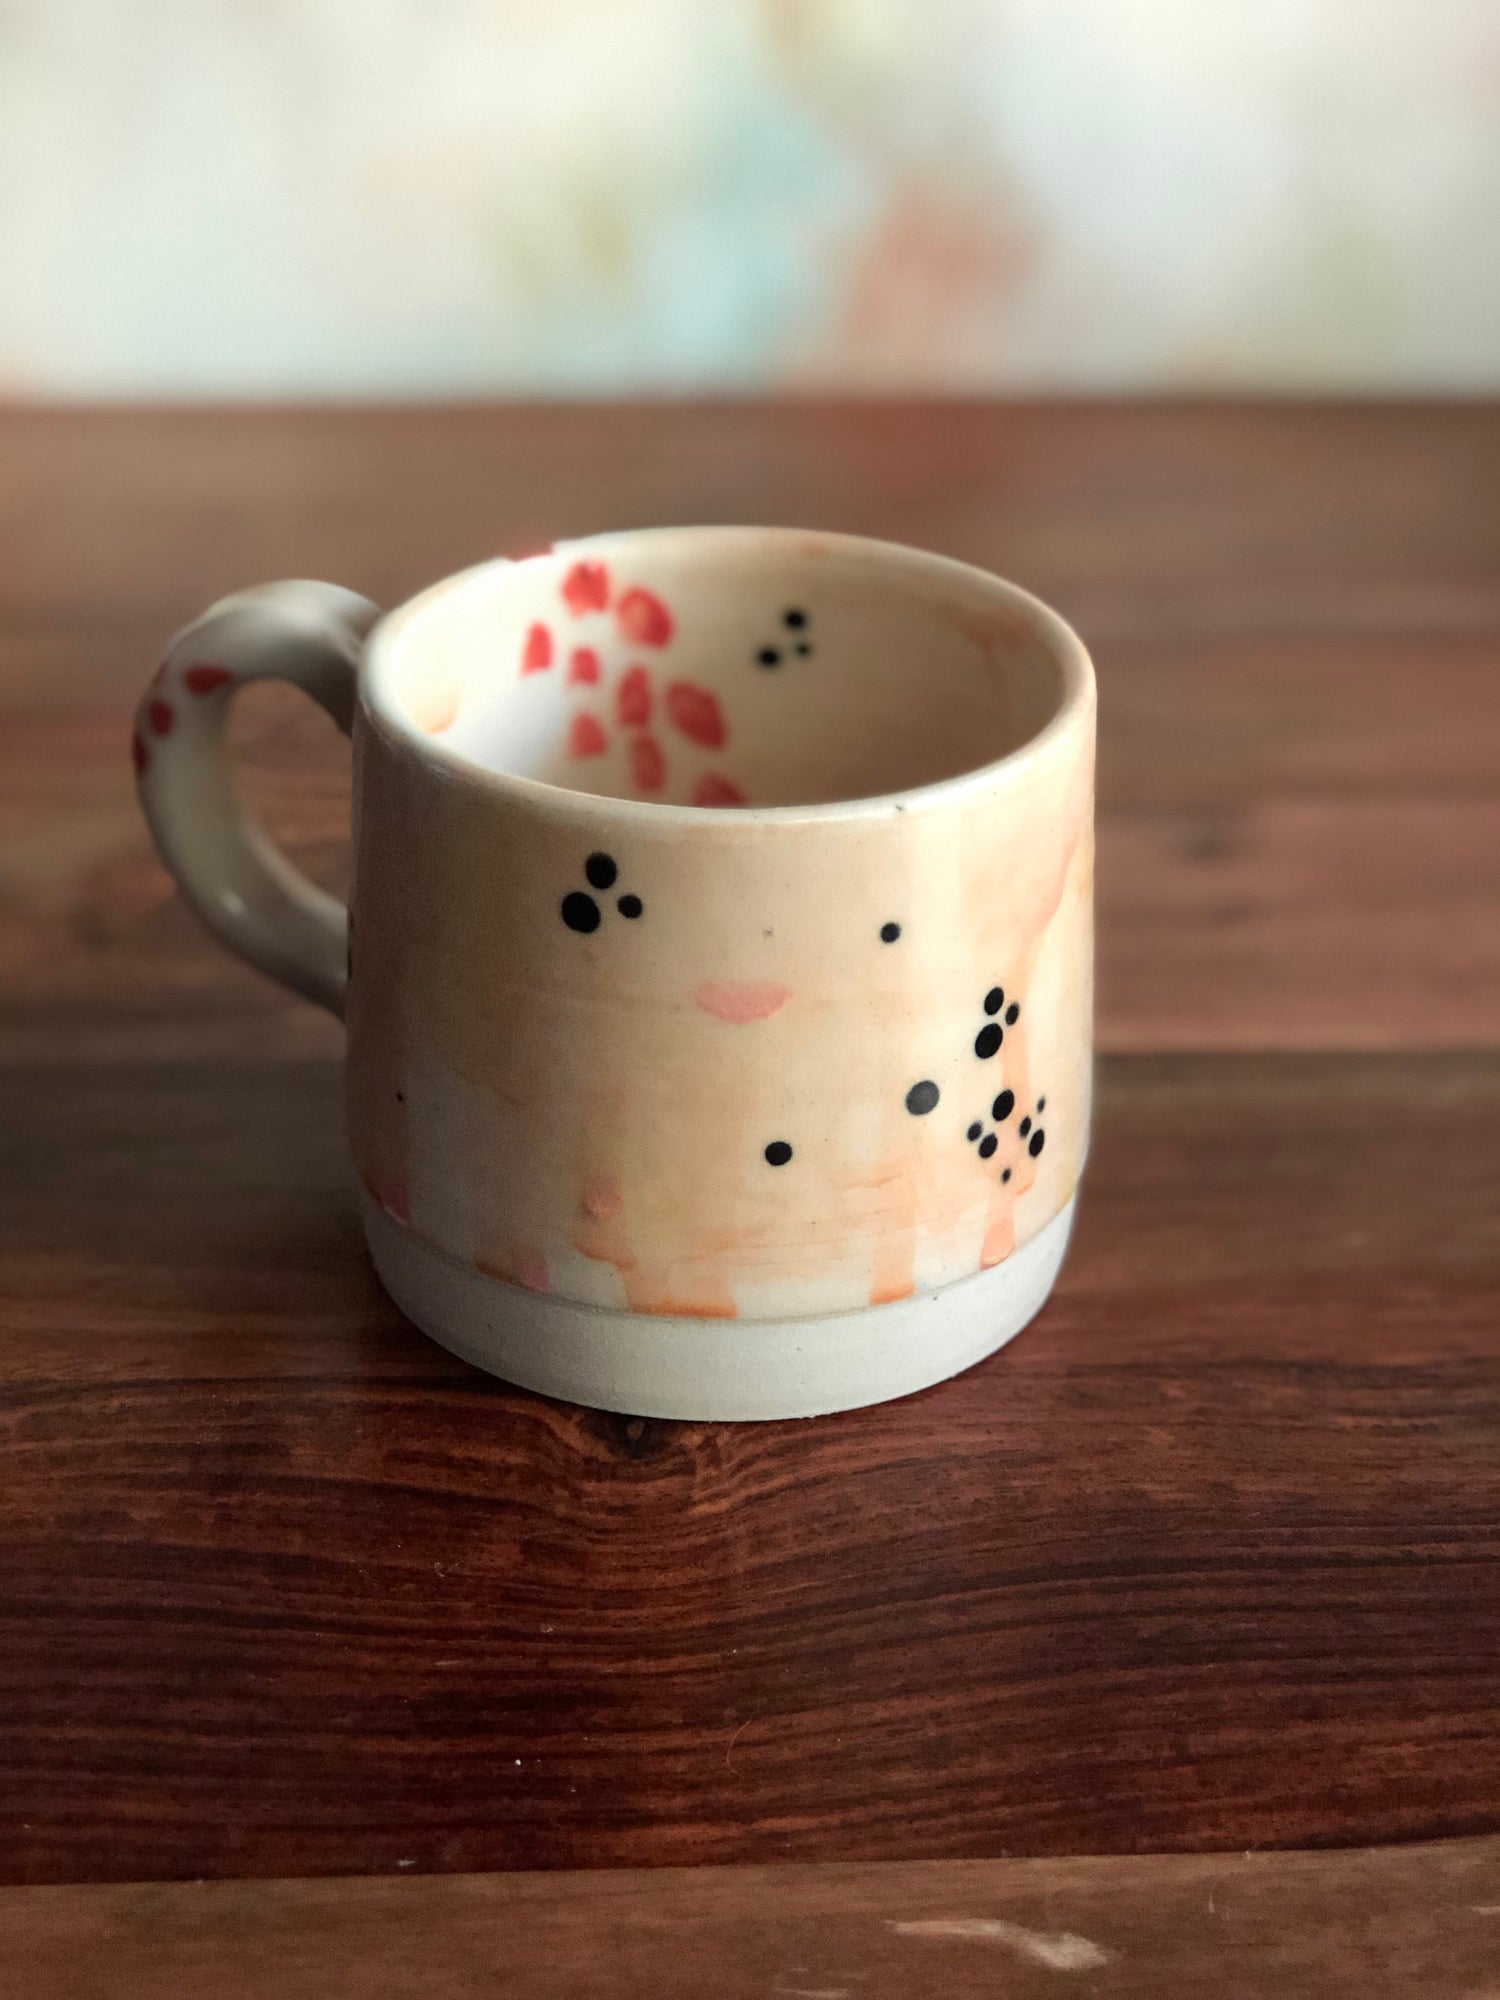 Cups & mugs